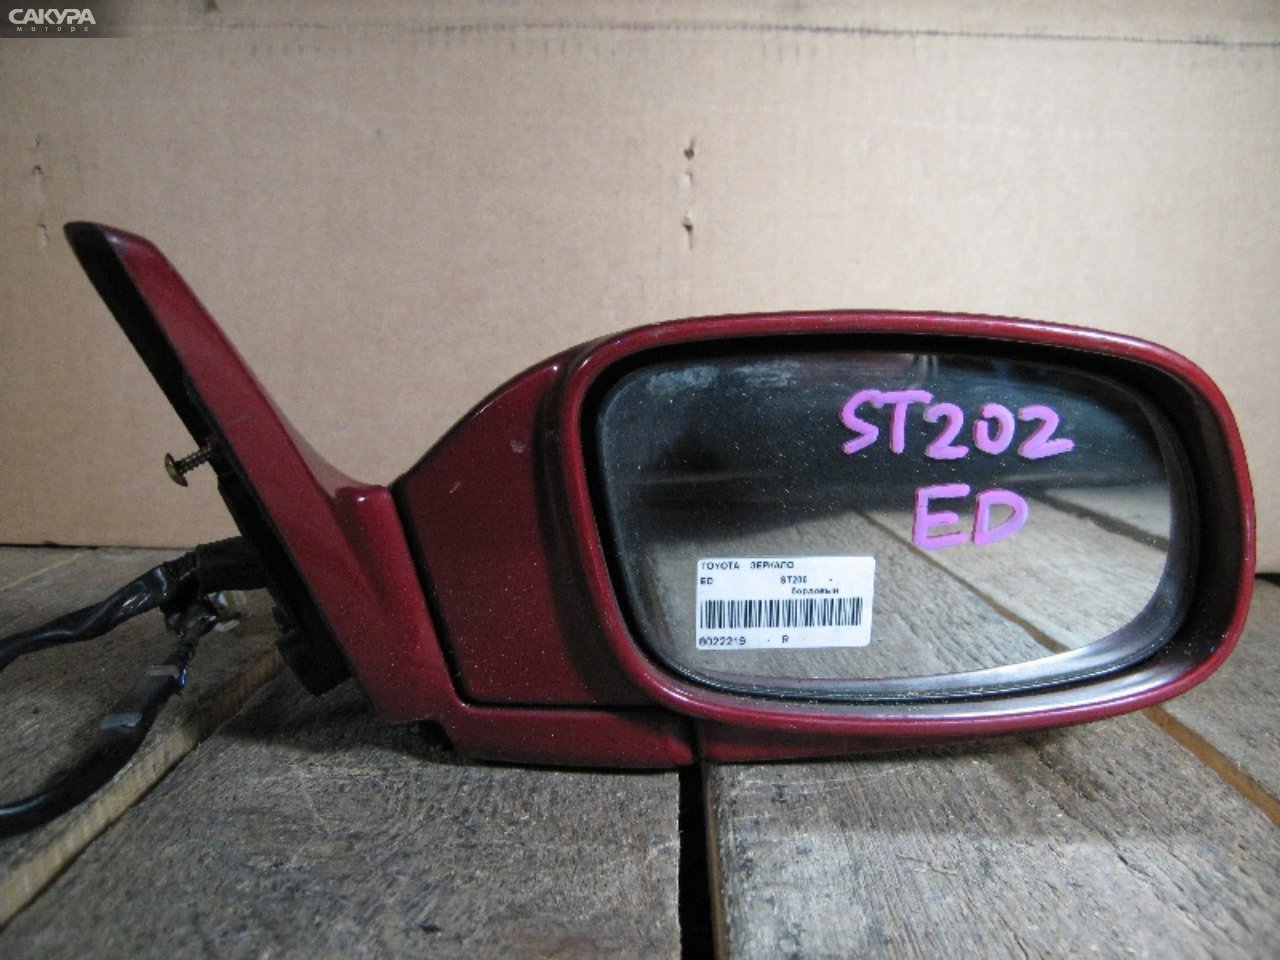 Зеркало боковое правое Toyota Carina ED ST200: купить в Сакура Абакан.